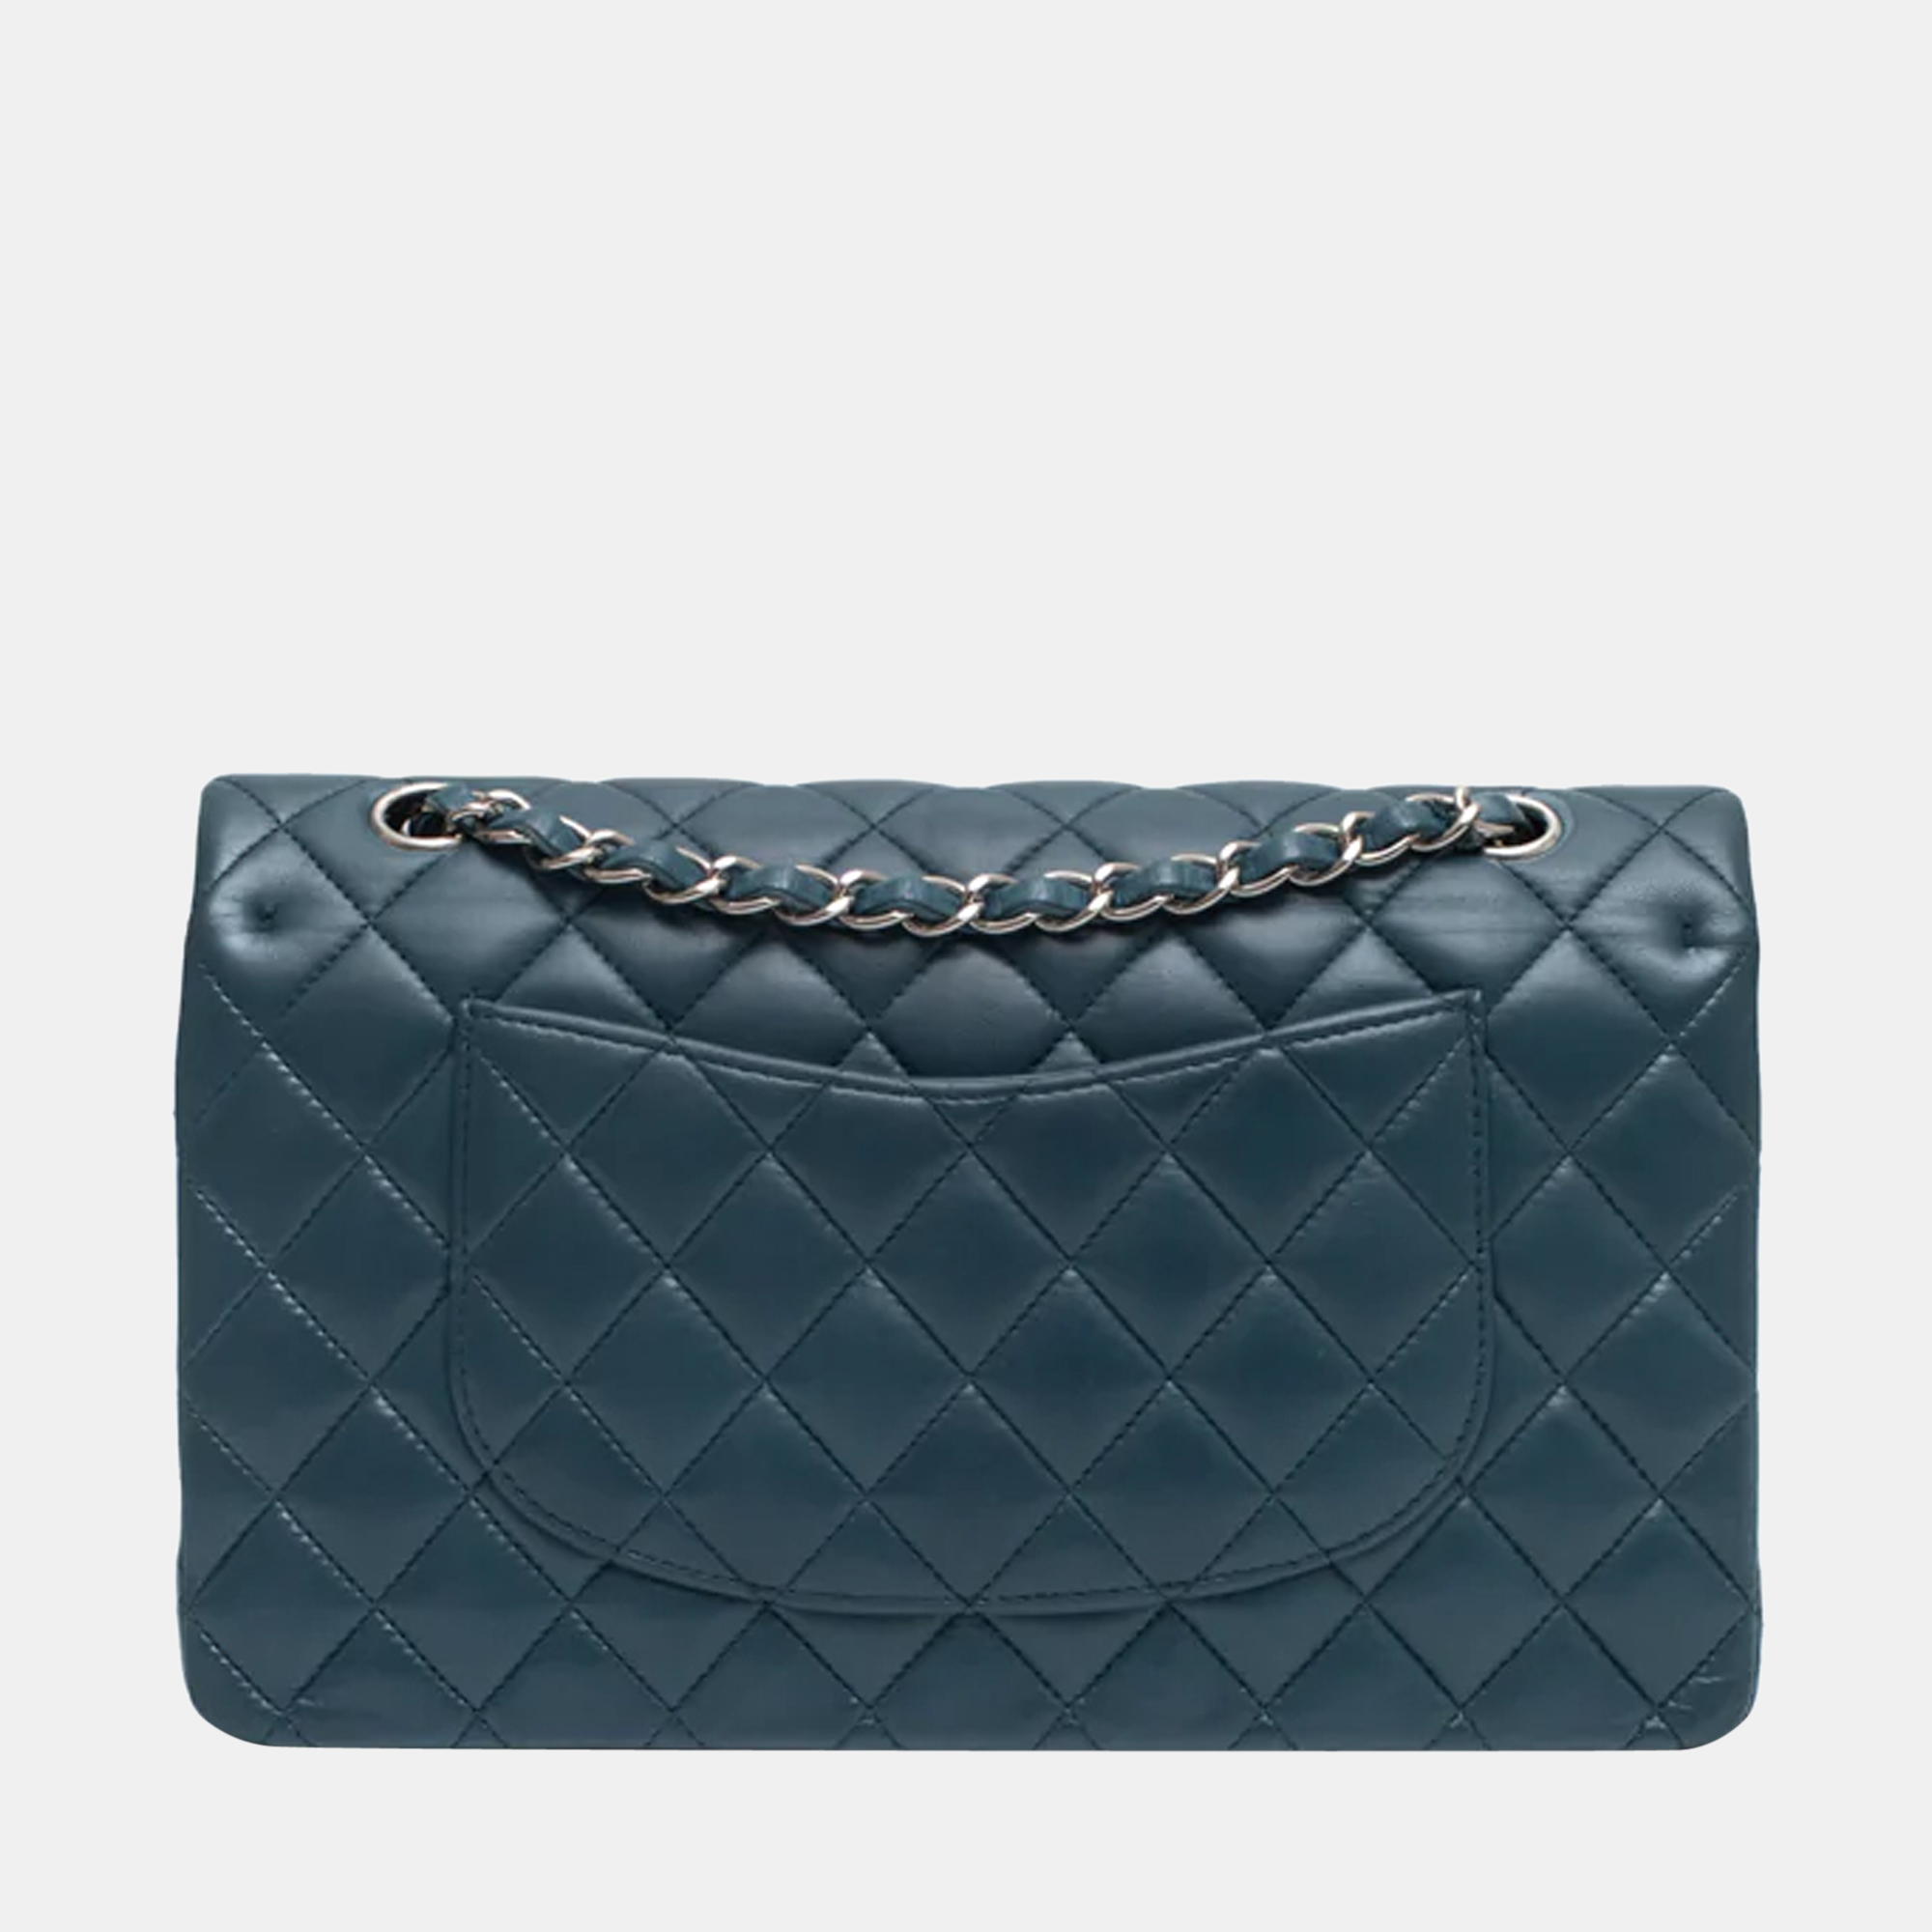 Chanel Blue Leather Medium Classic Double Flap Bag